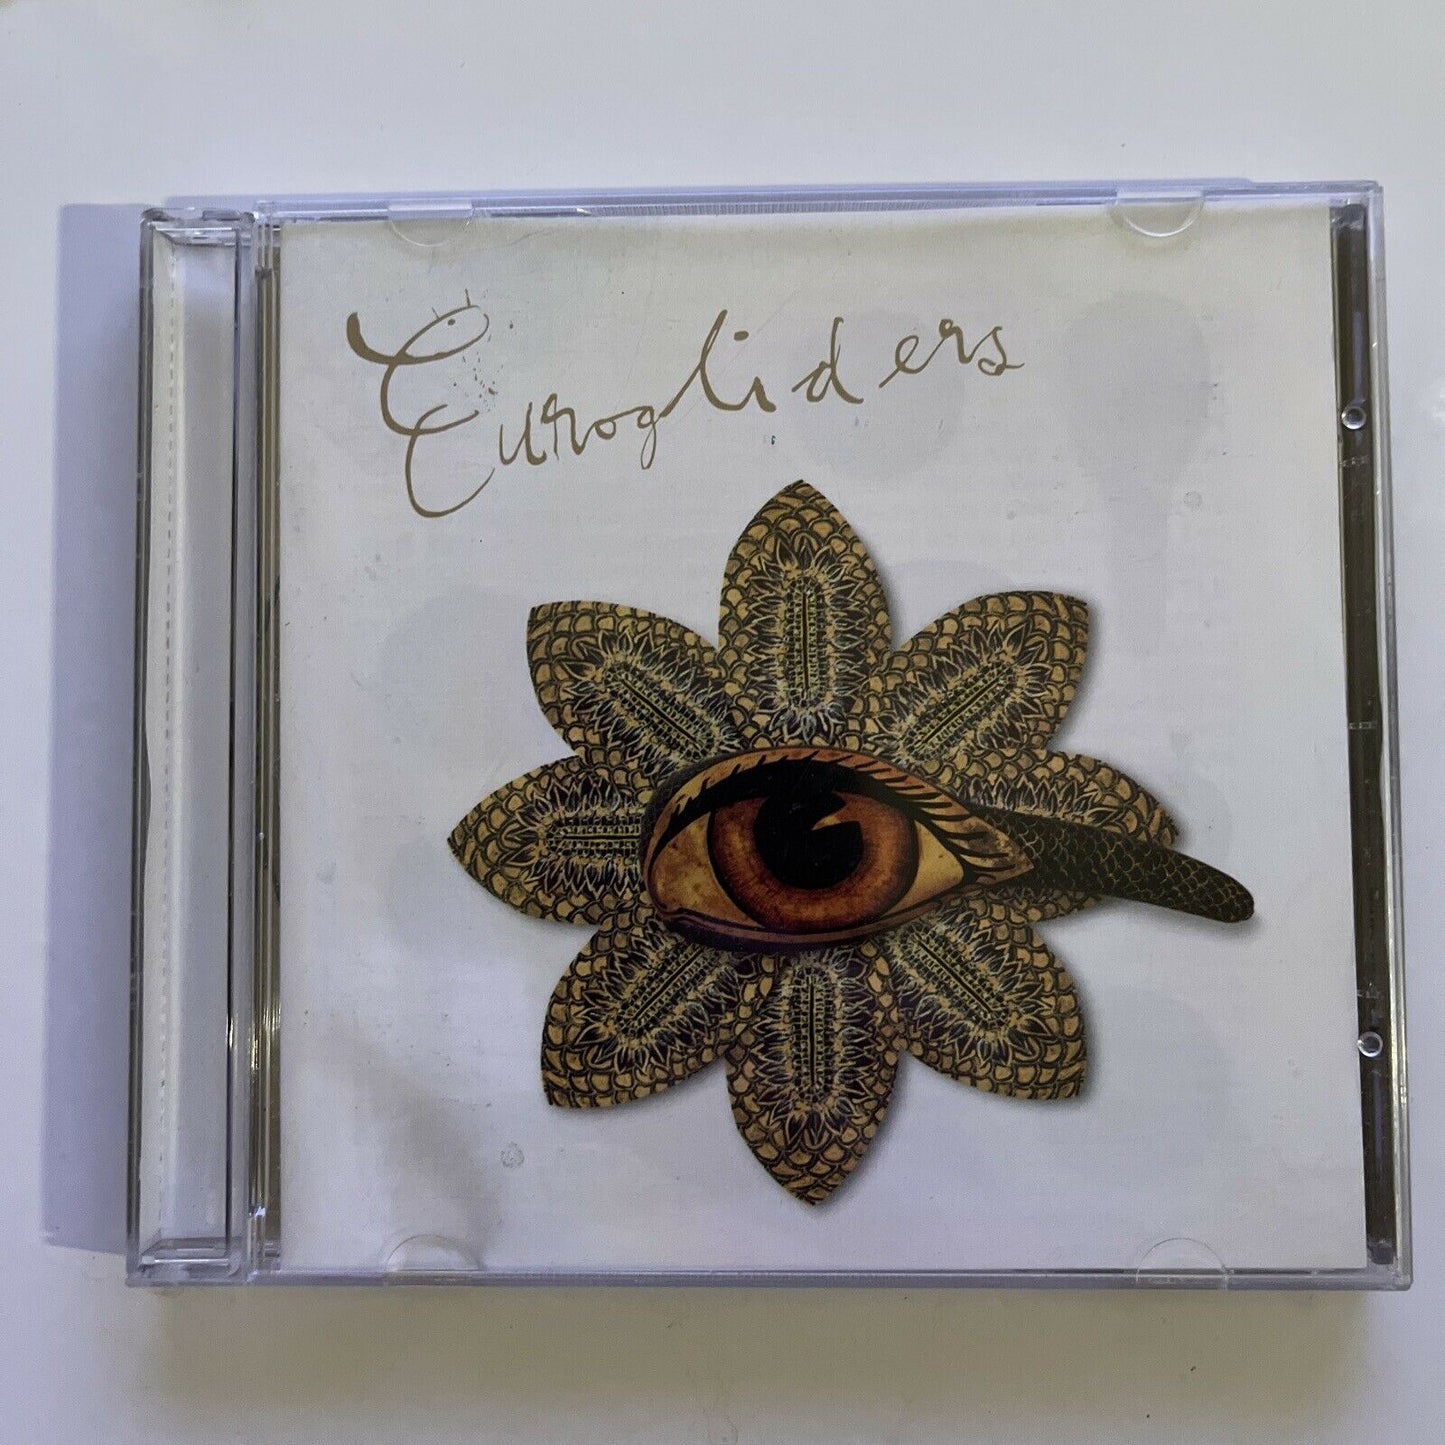 Eurogliders by Eurogliders (CD, 2005) Album